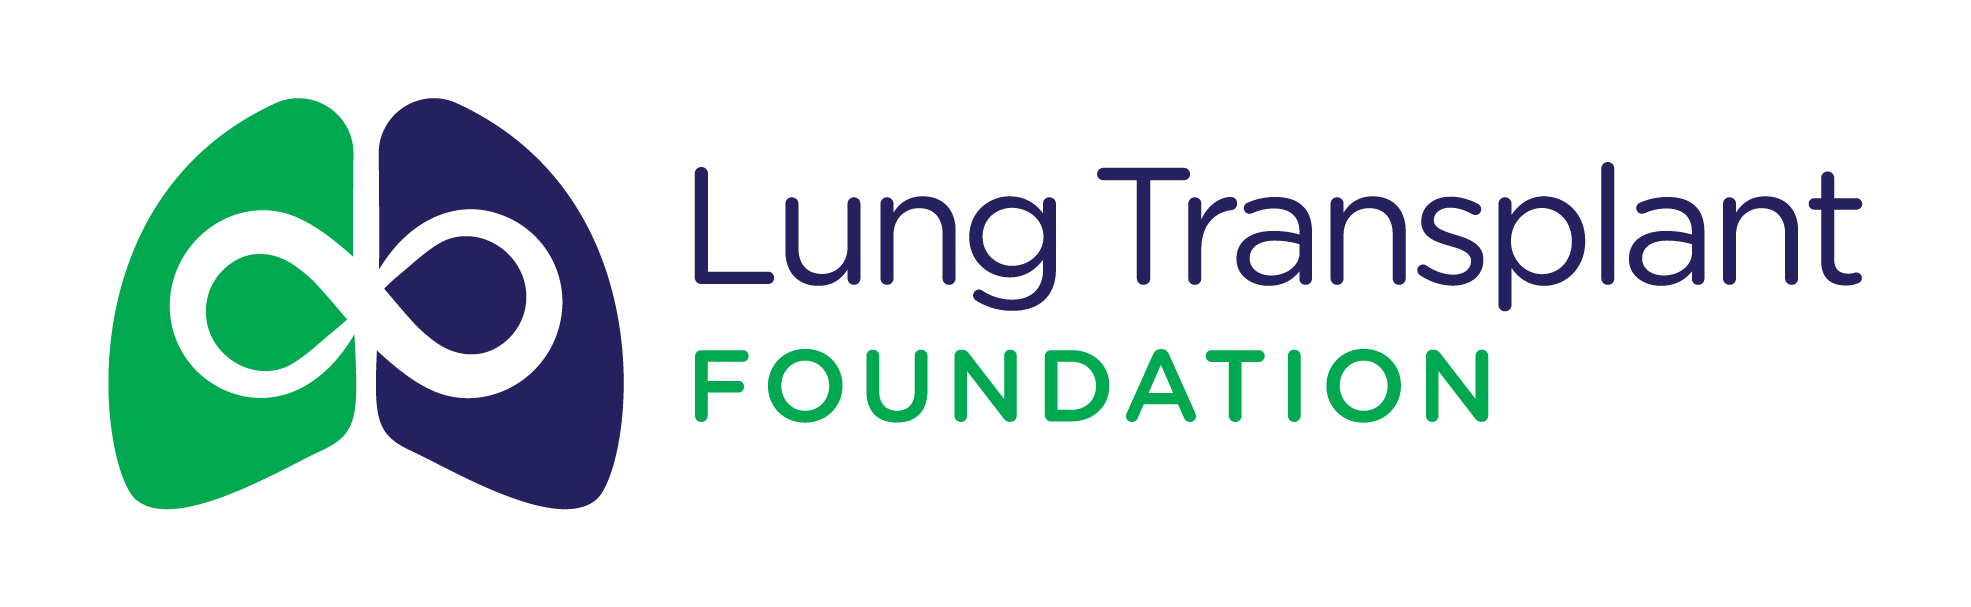 lung-transplant-foundation